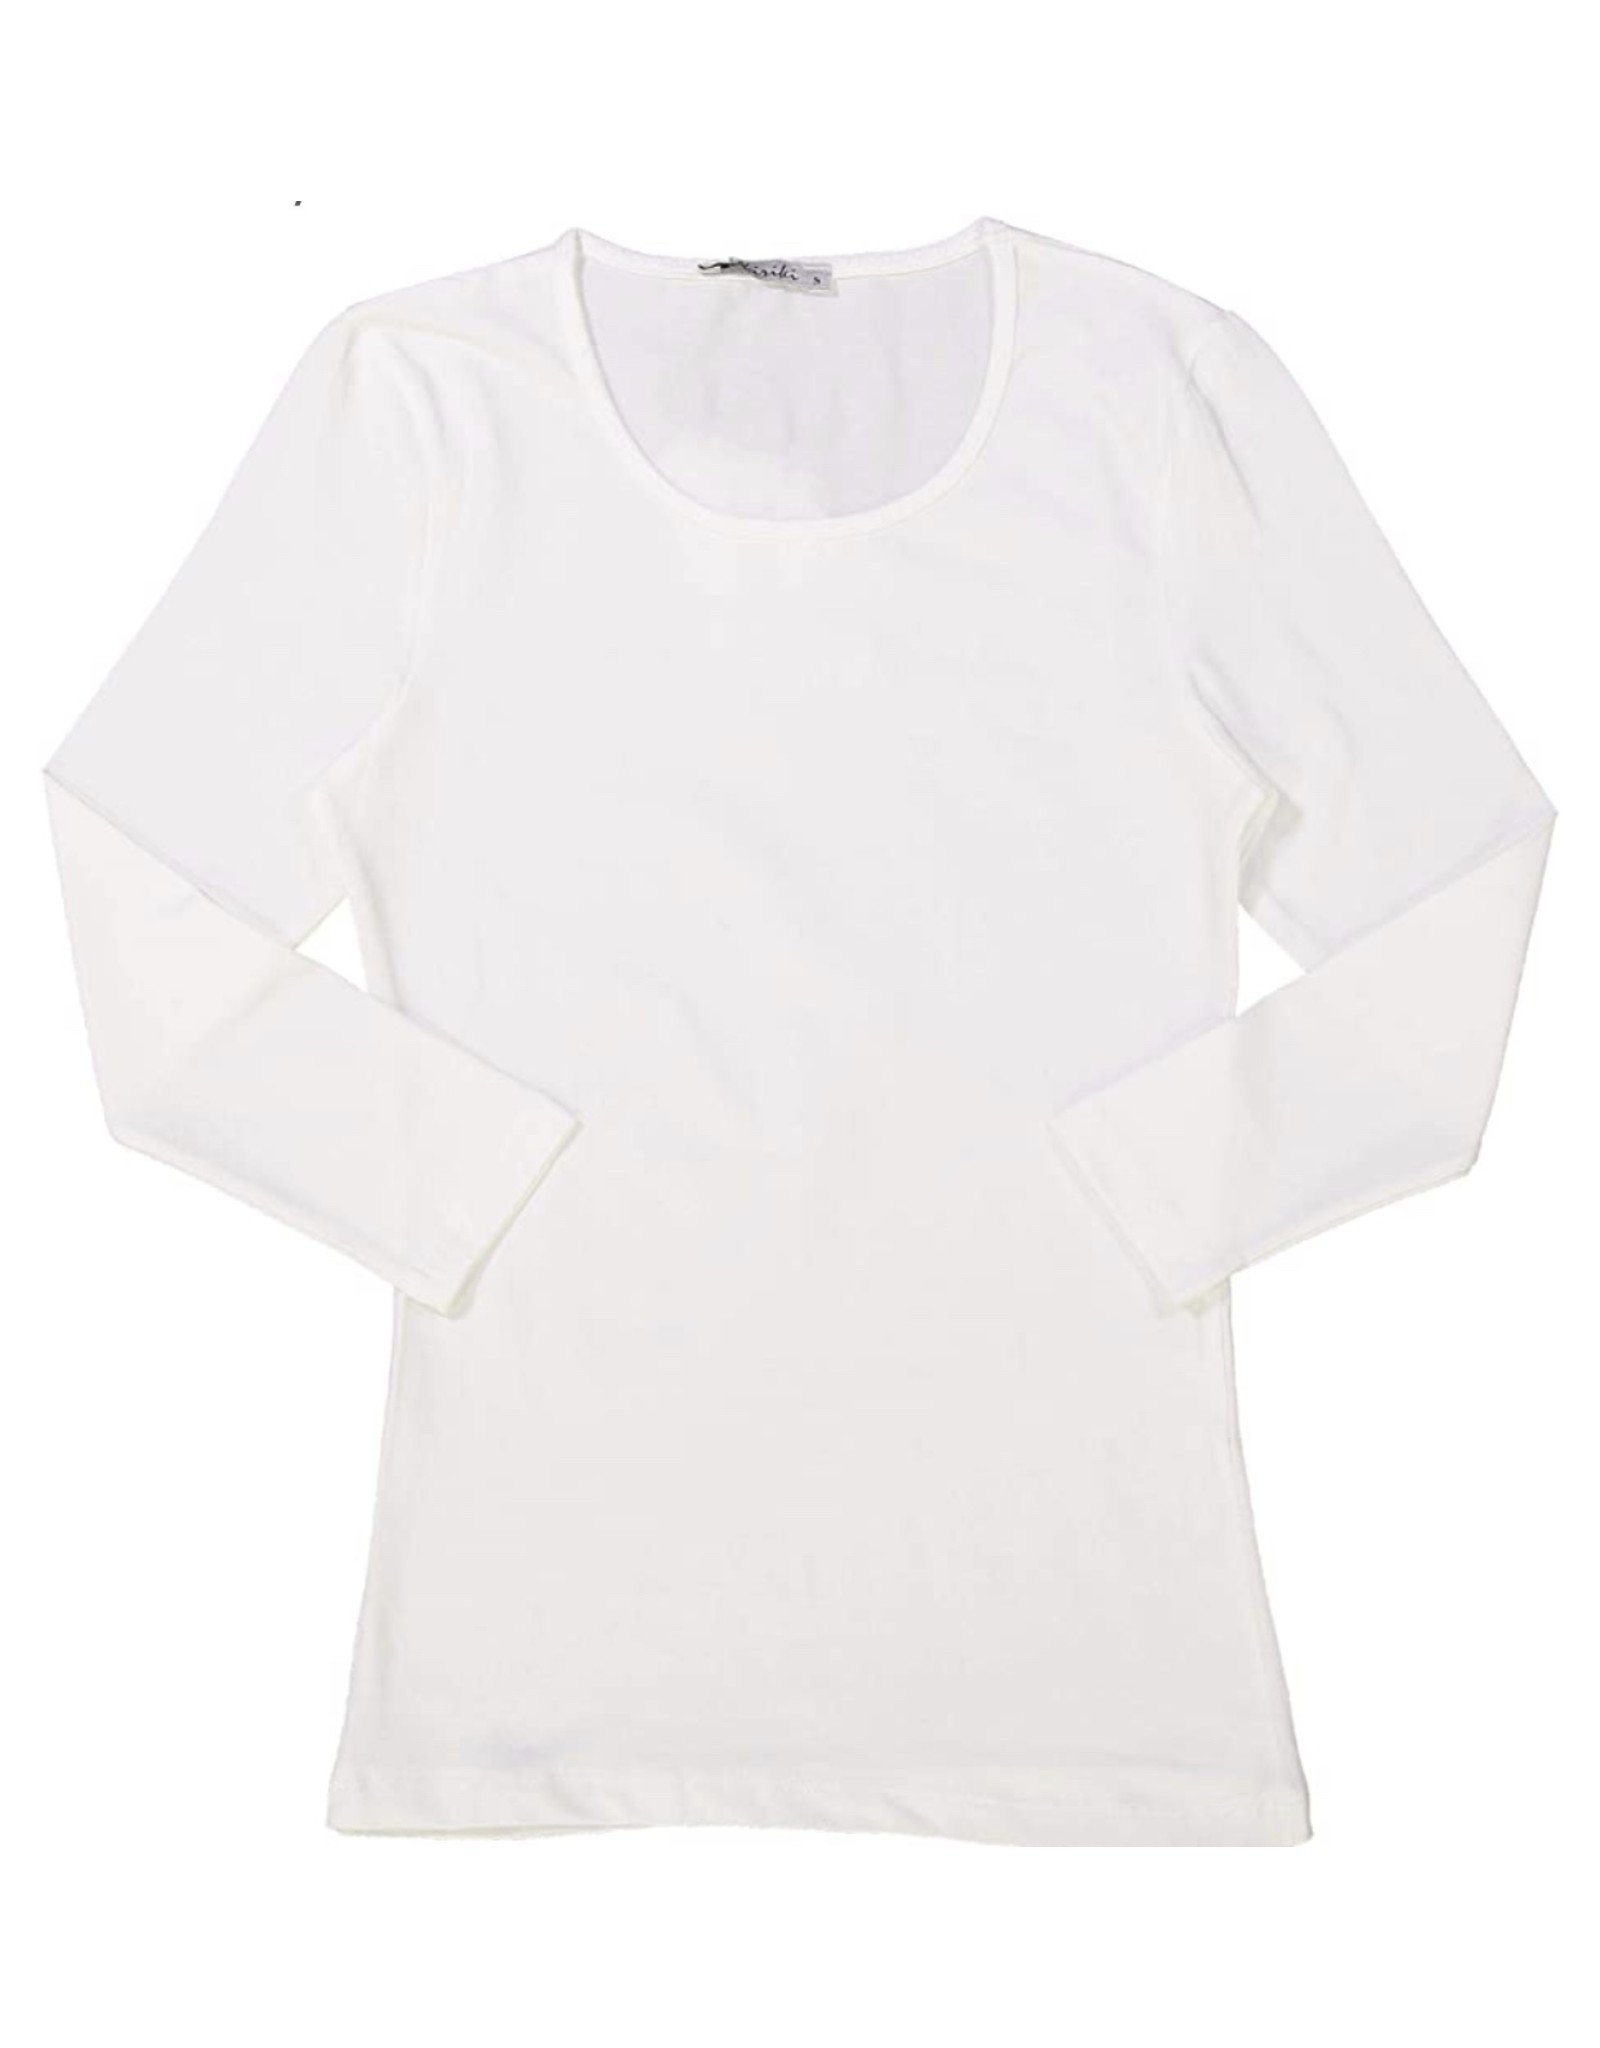 Kiki Riki Kiki Riki Women's 3/4 Length Sleeve Scoop Neck Cotton Shell 18909